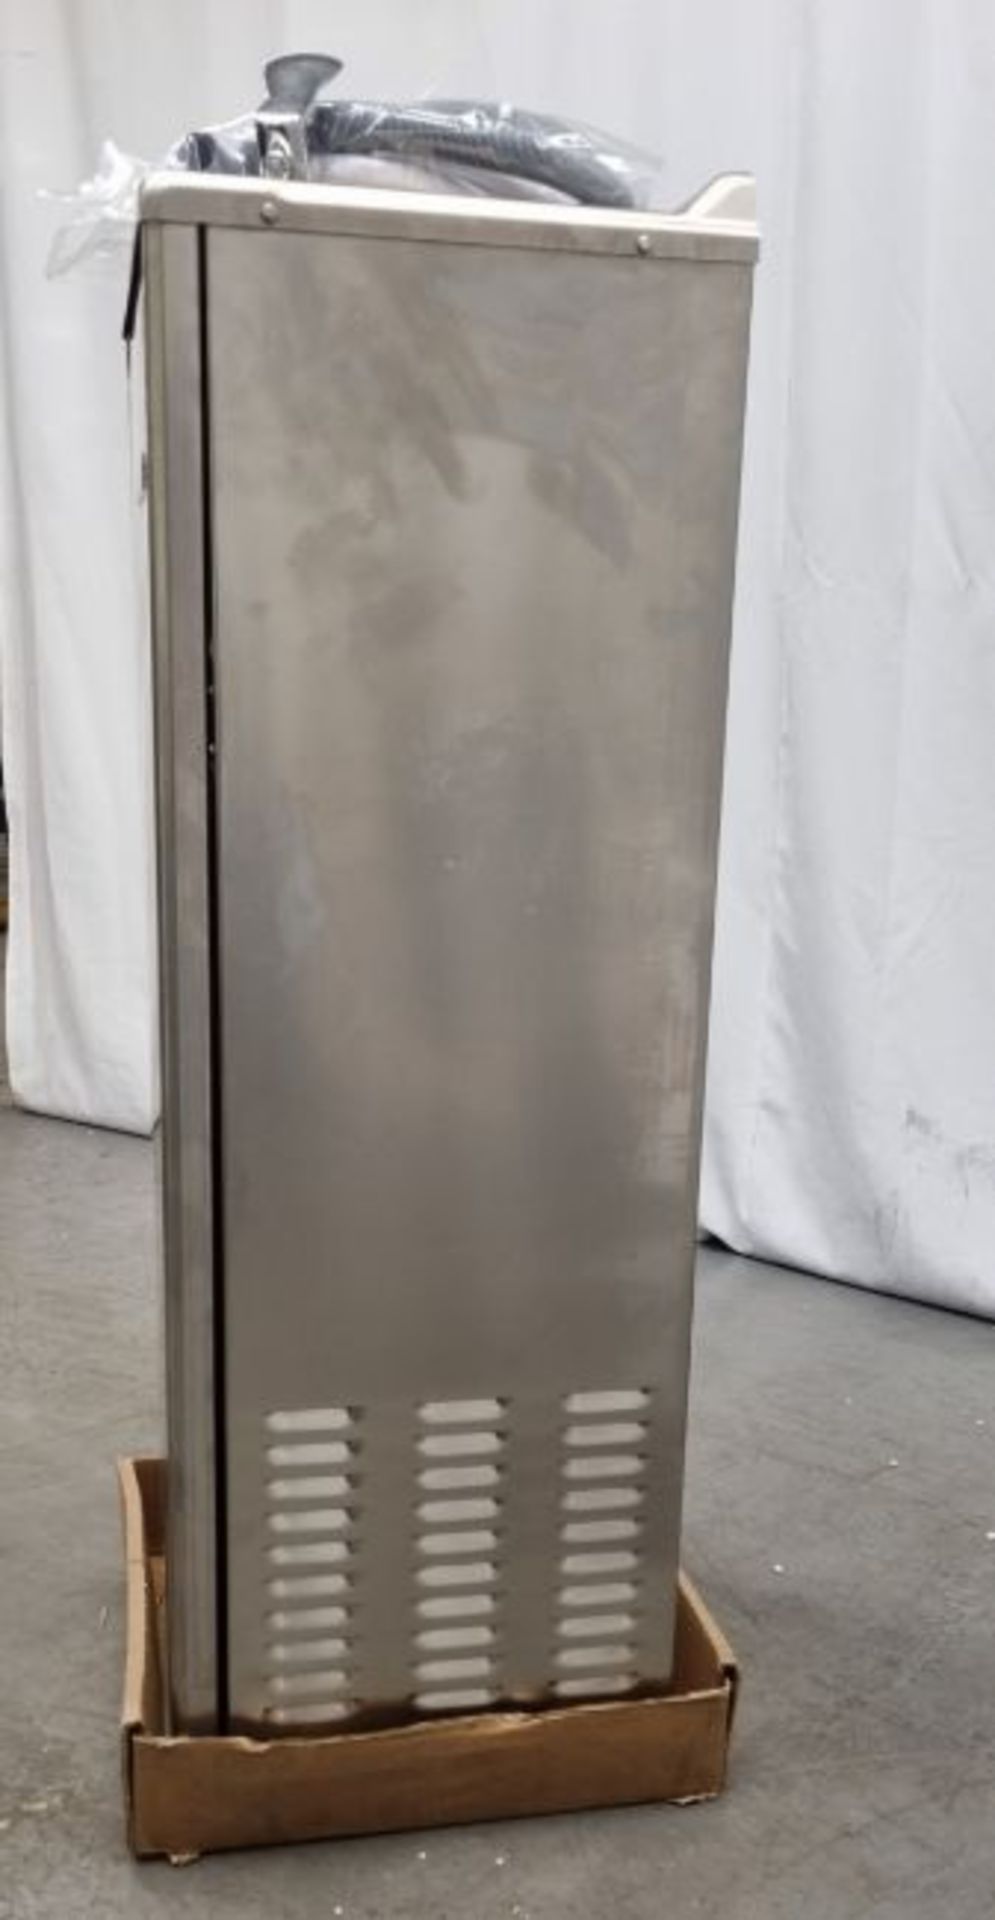 Scotsman SCW14-FP water cooler FP evo version - 230V 50 / 60Hz - L 410 x W 340 x H 820mm - Image 4 of 8